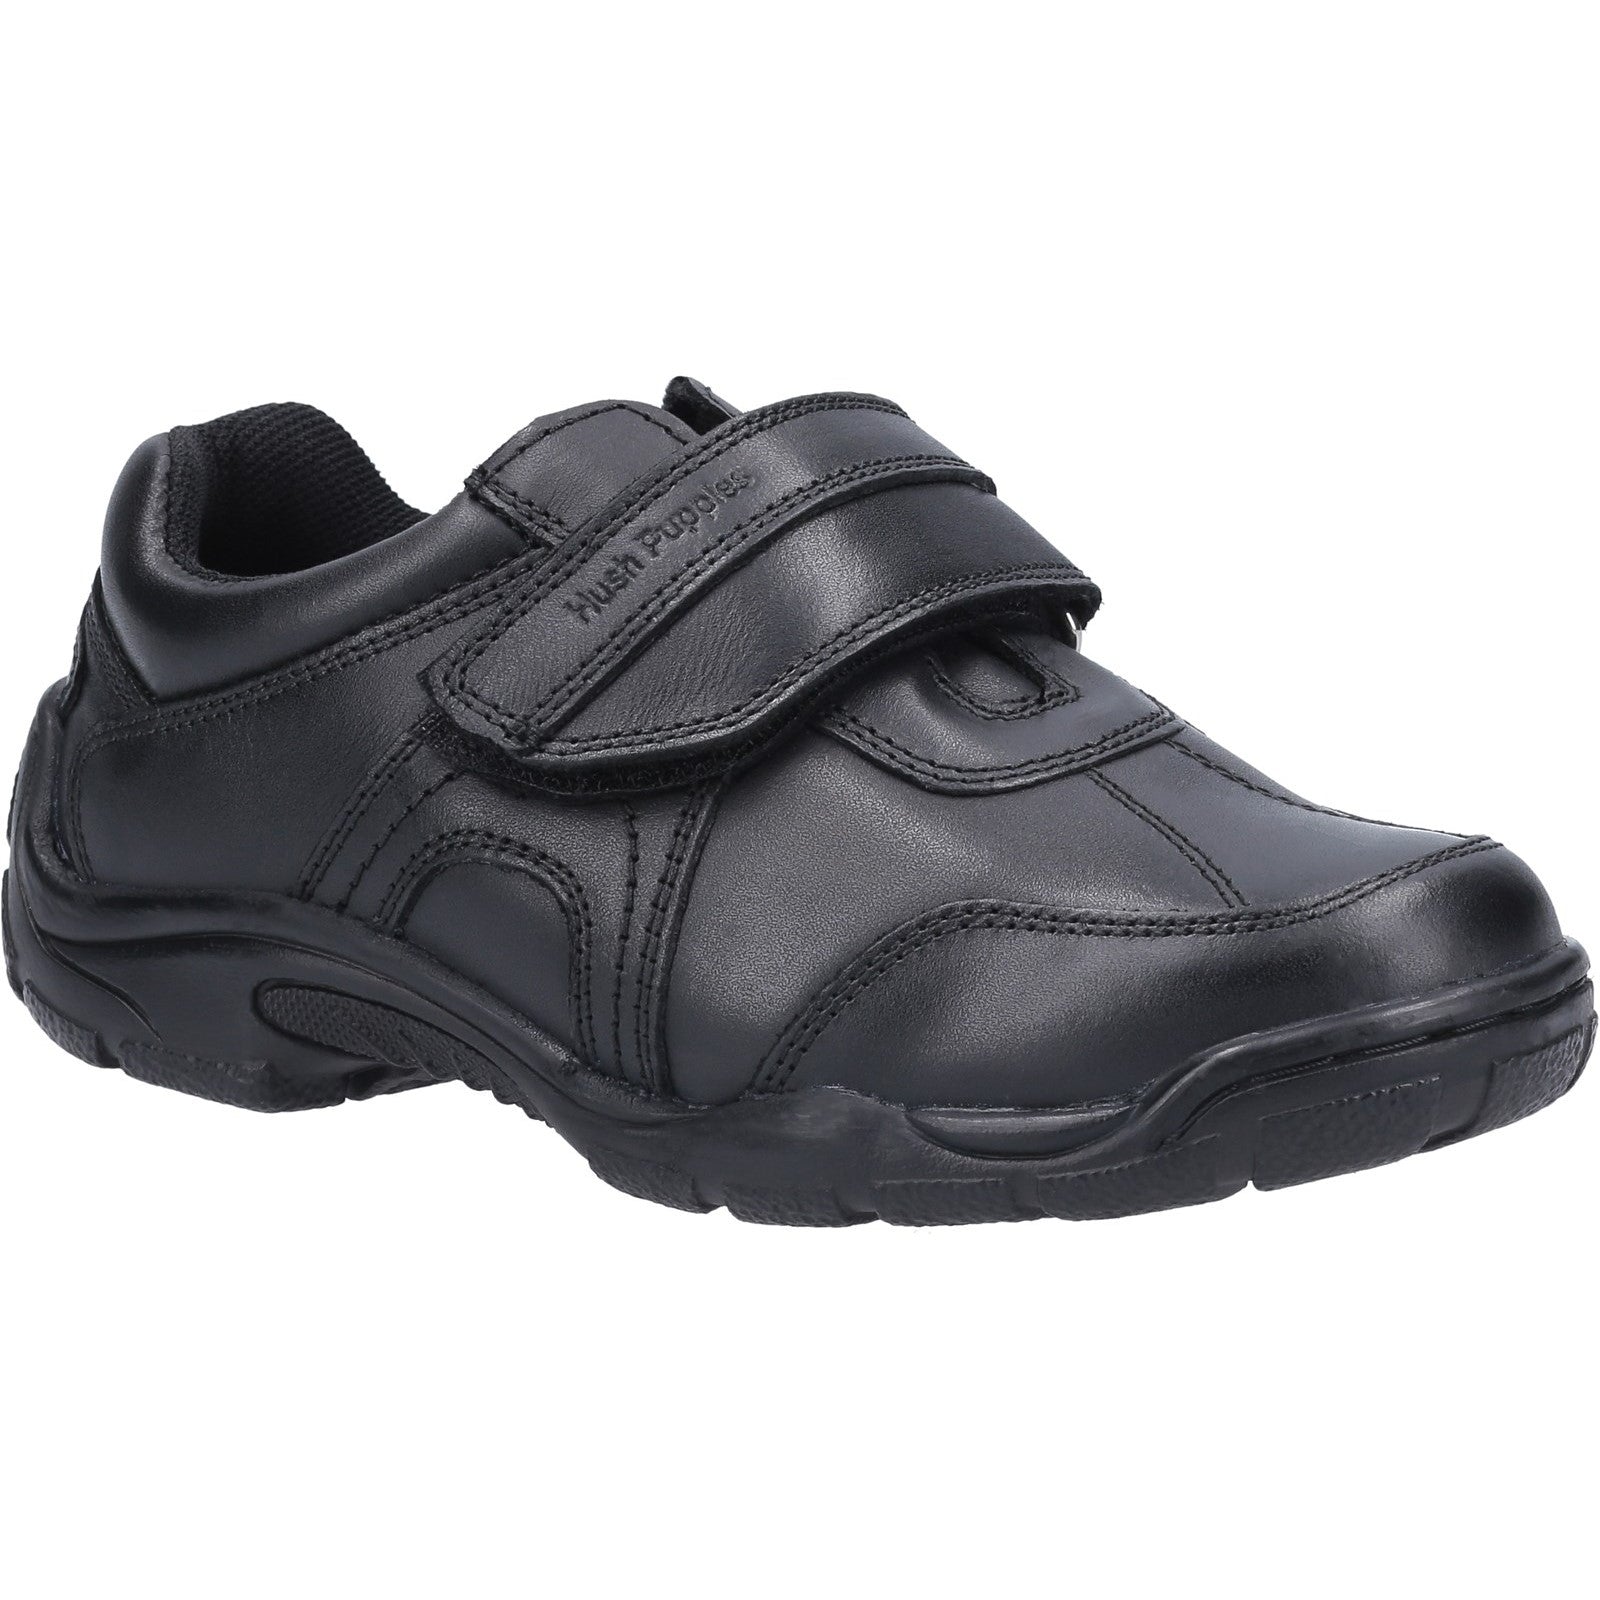 Hush Puppies Boys Arlo Leather School Shoes - Black